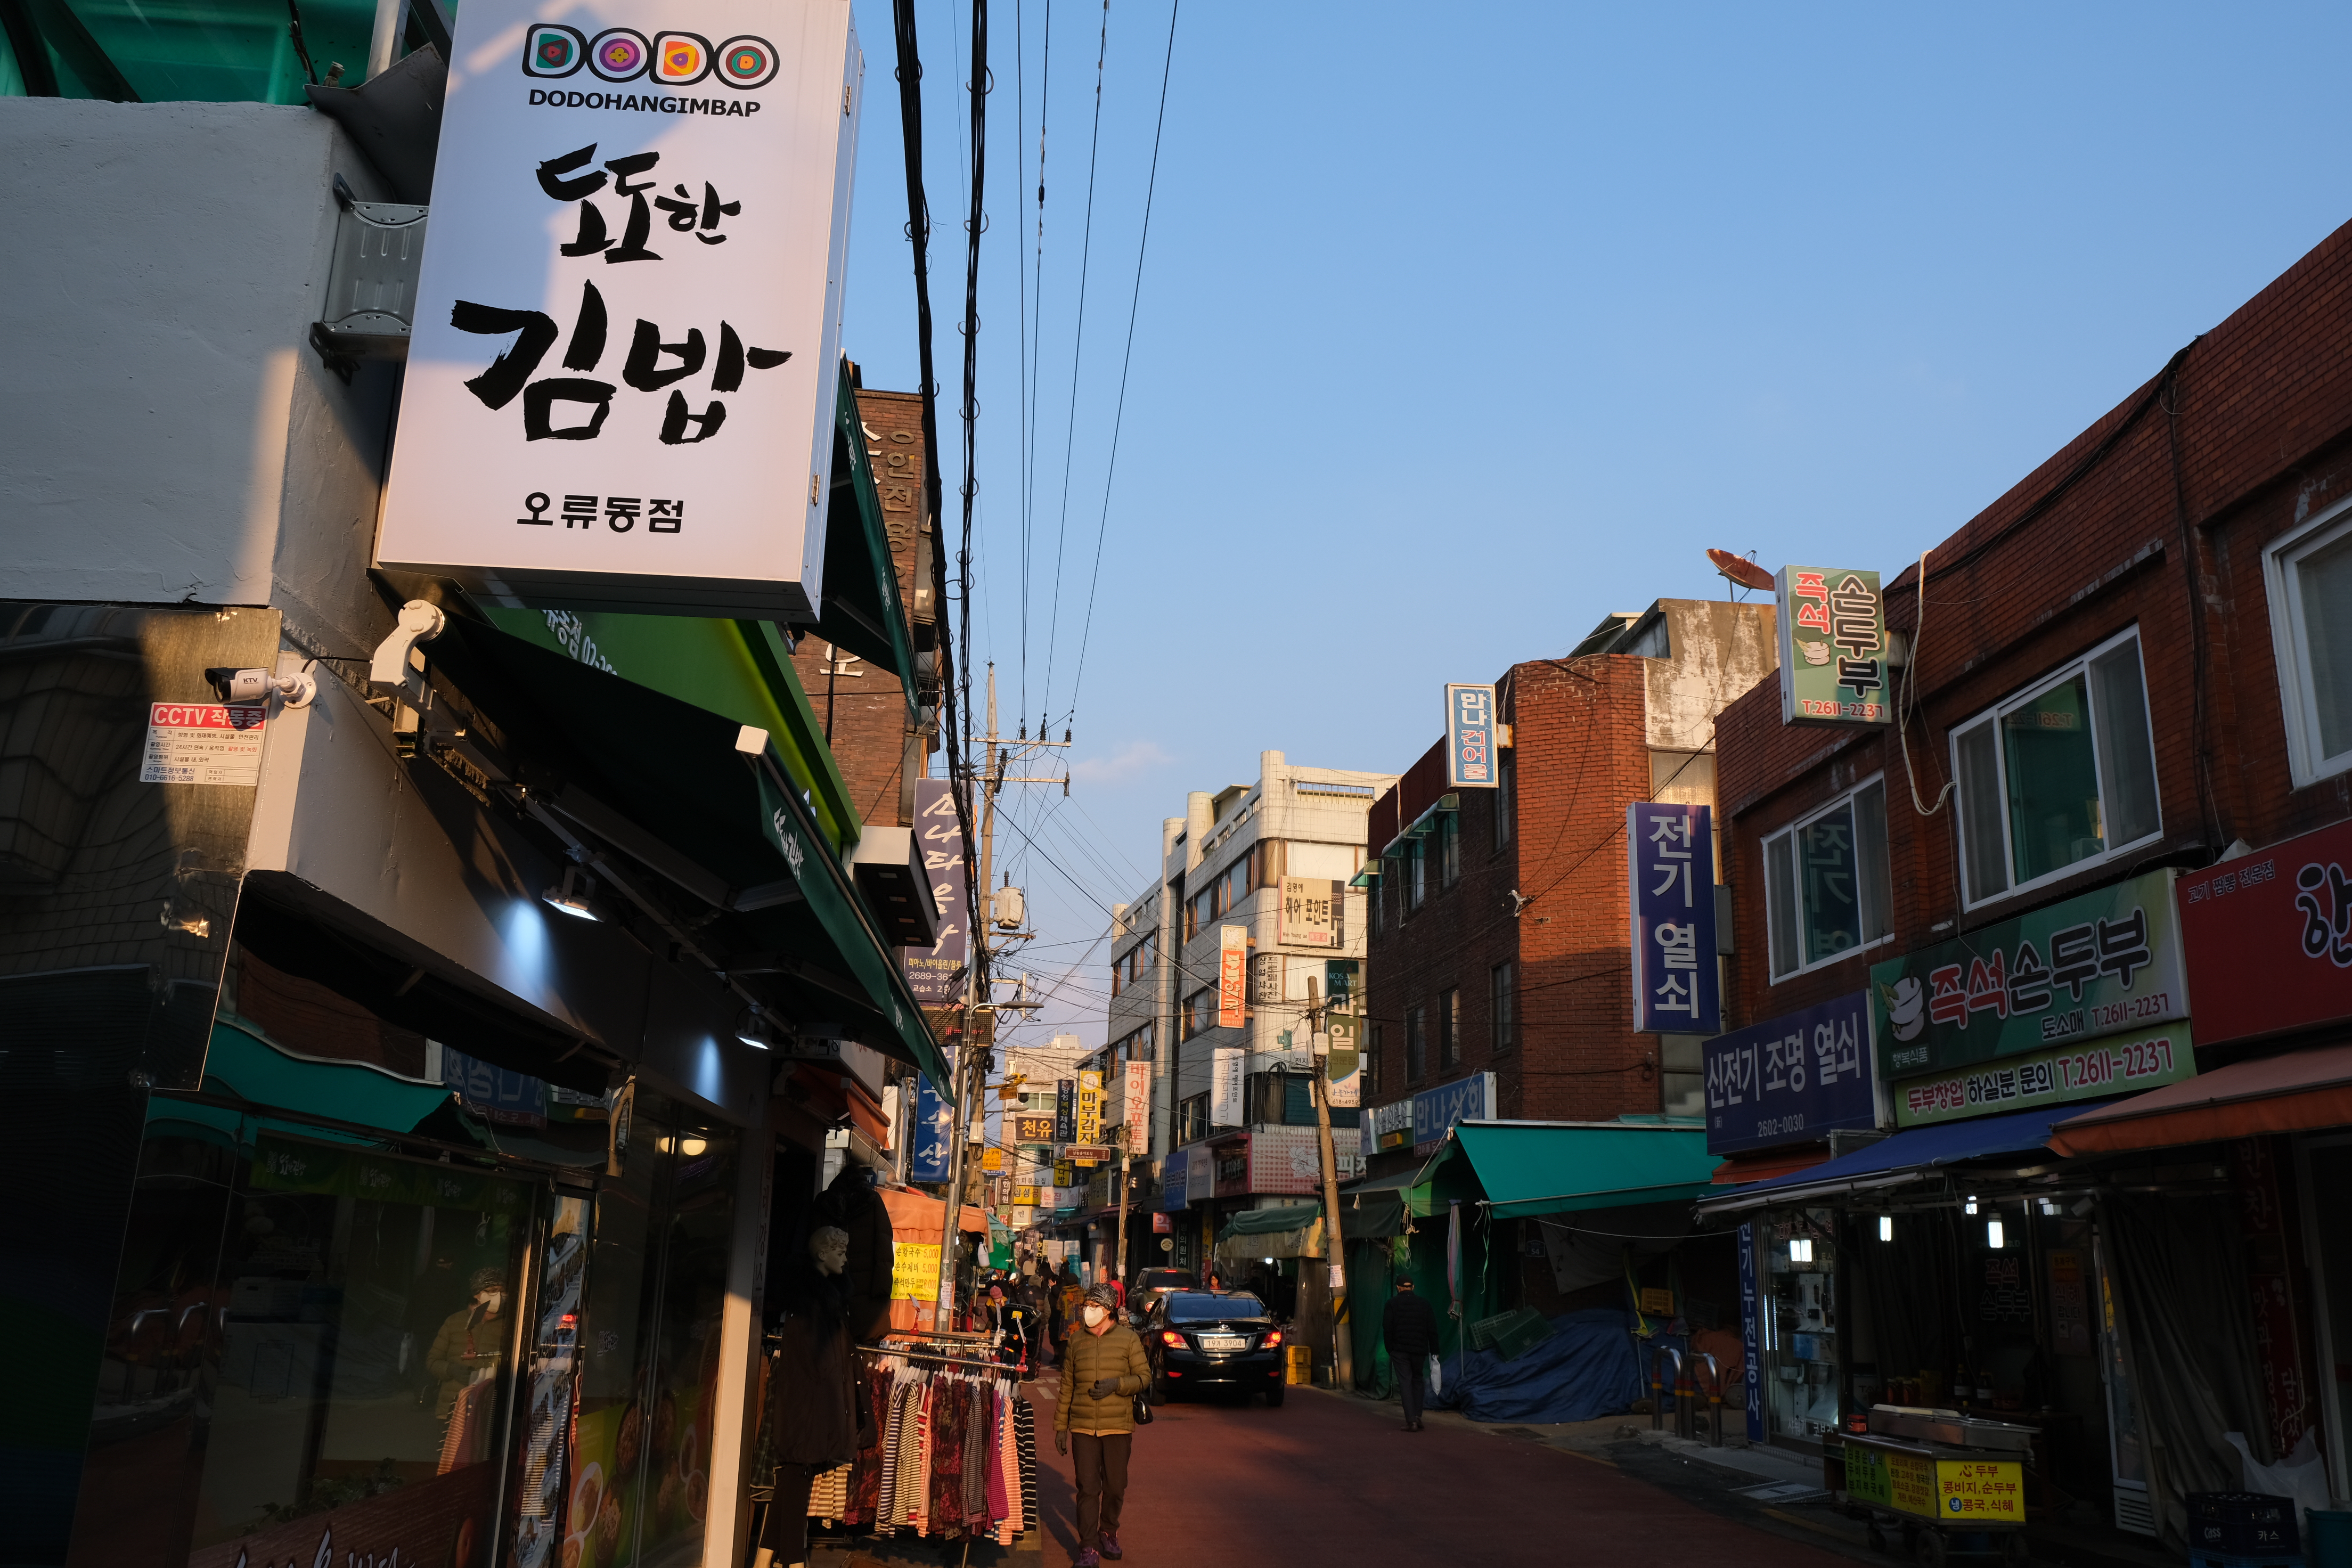 Ramyun Dodo Han Gimbap Seoul South Korea